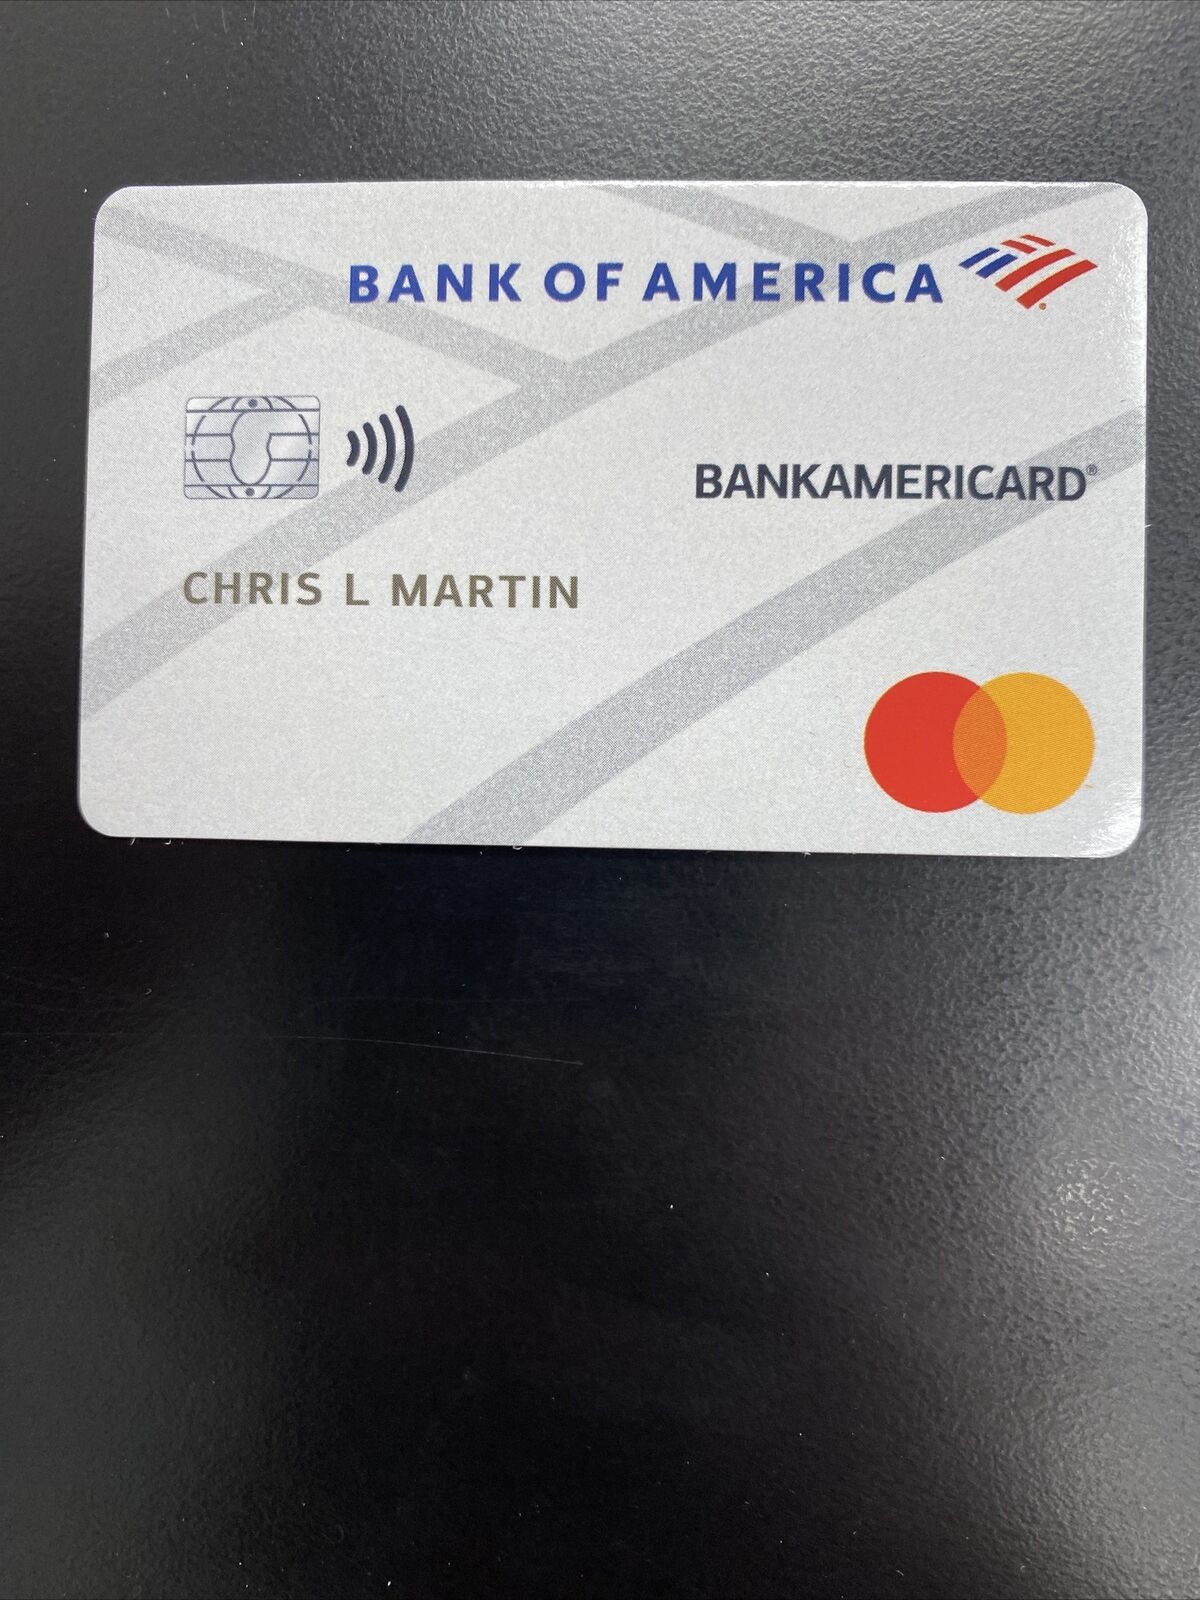 Bank of America promo credit card bankamericard for Sale Celebrity